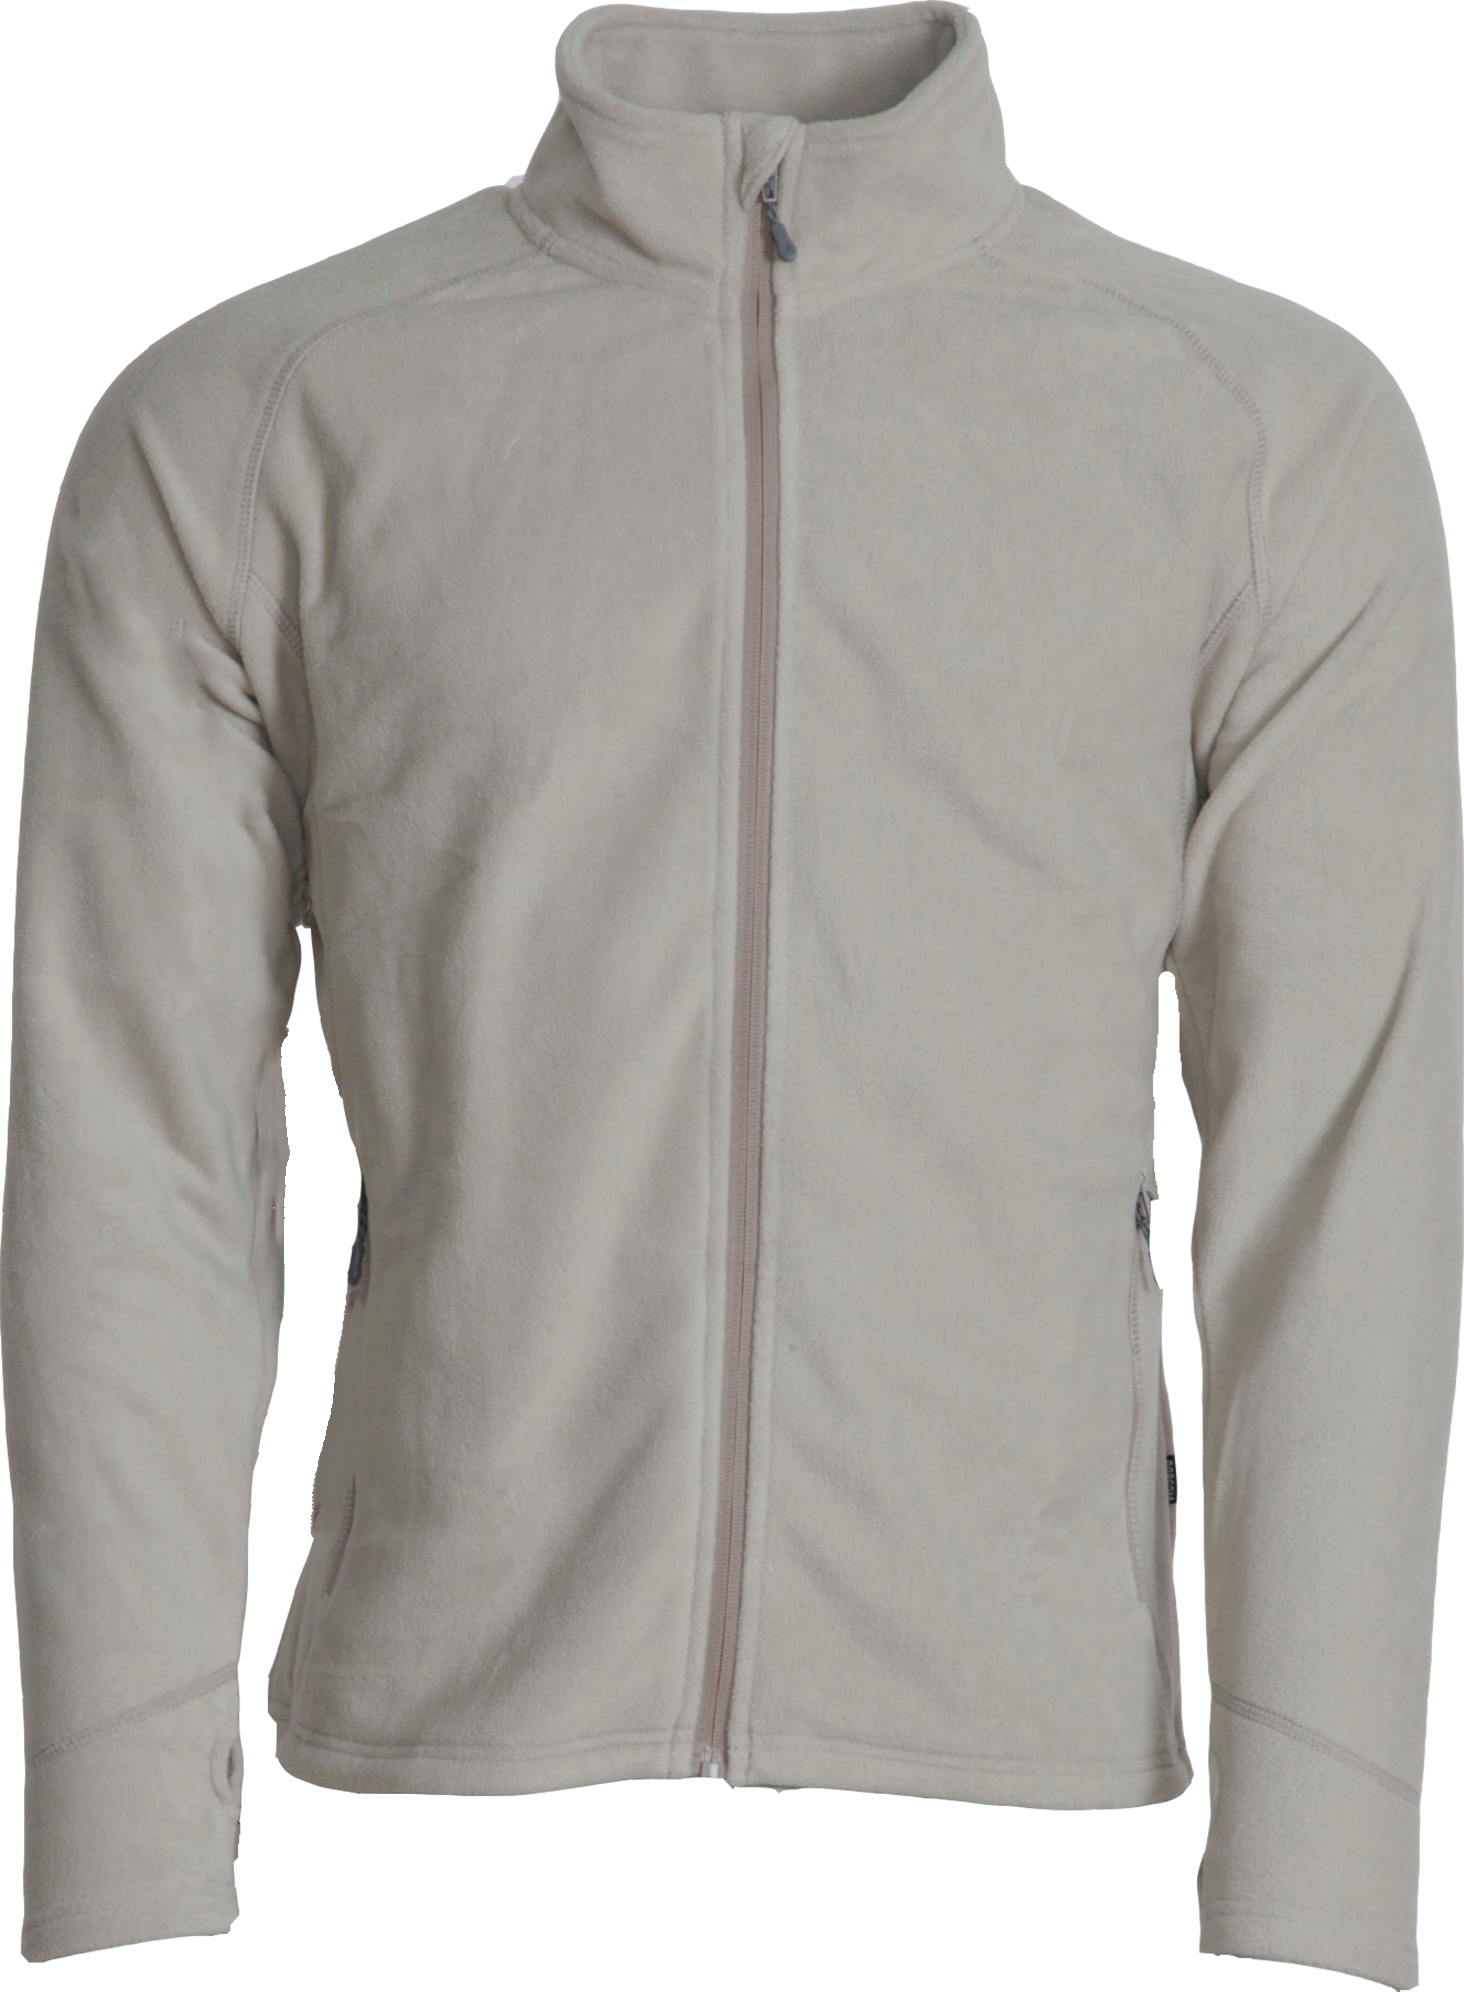 Dobsom Men’s Pescara Fleece Jacket Khaki